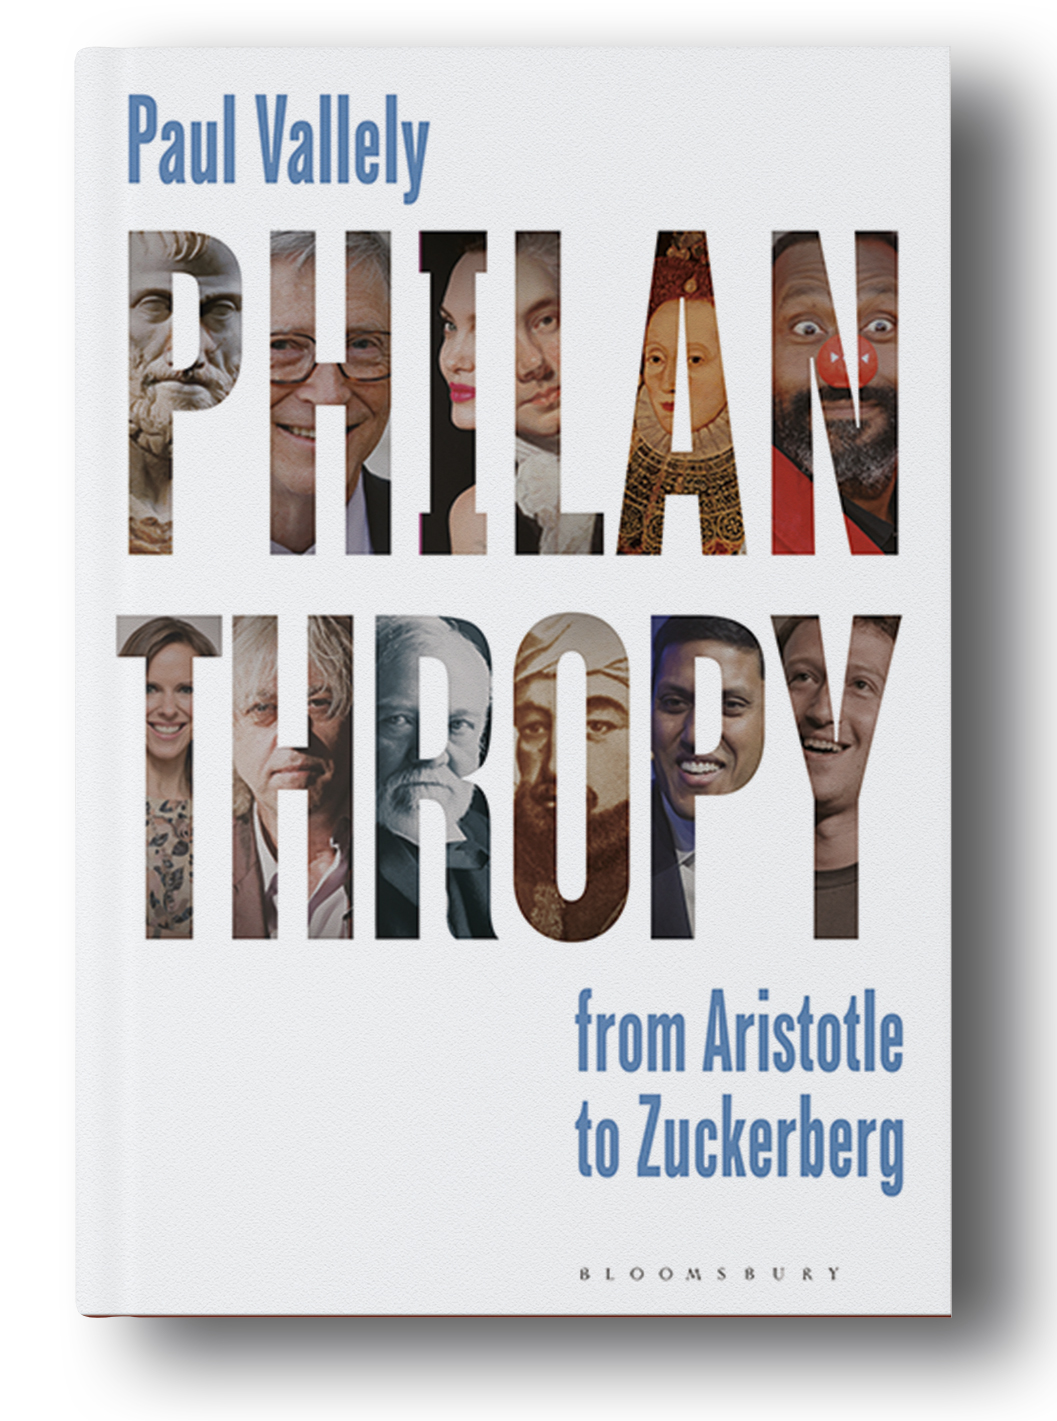 PAST EVENT: Webinar on Philanthropy - from Aristotle to Zuckerberg